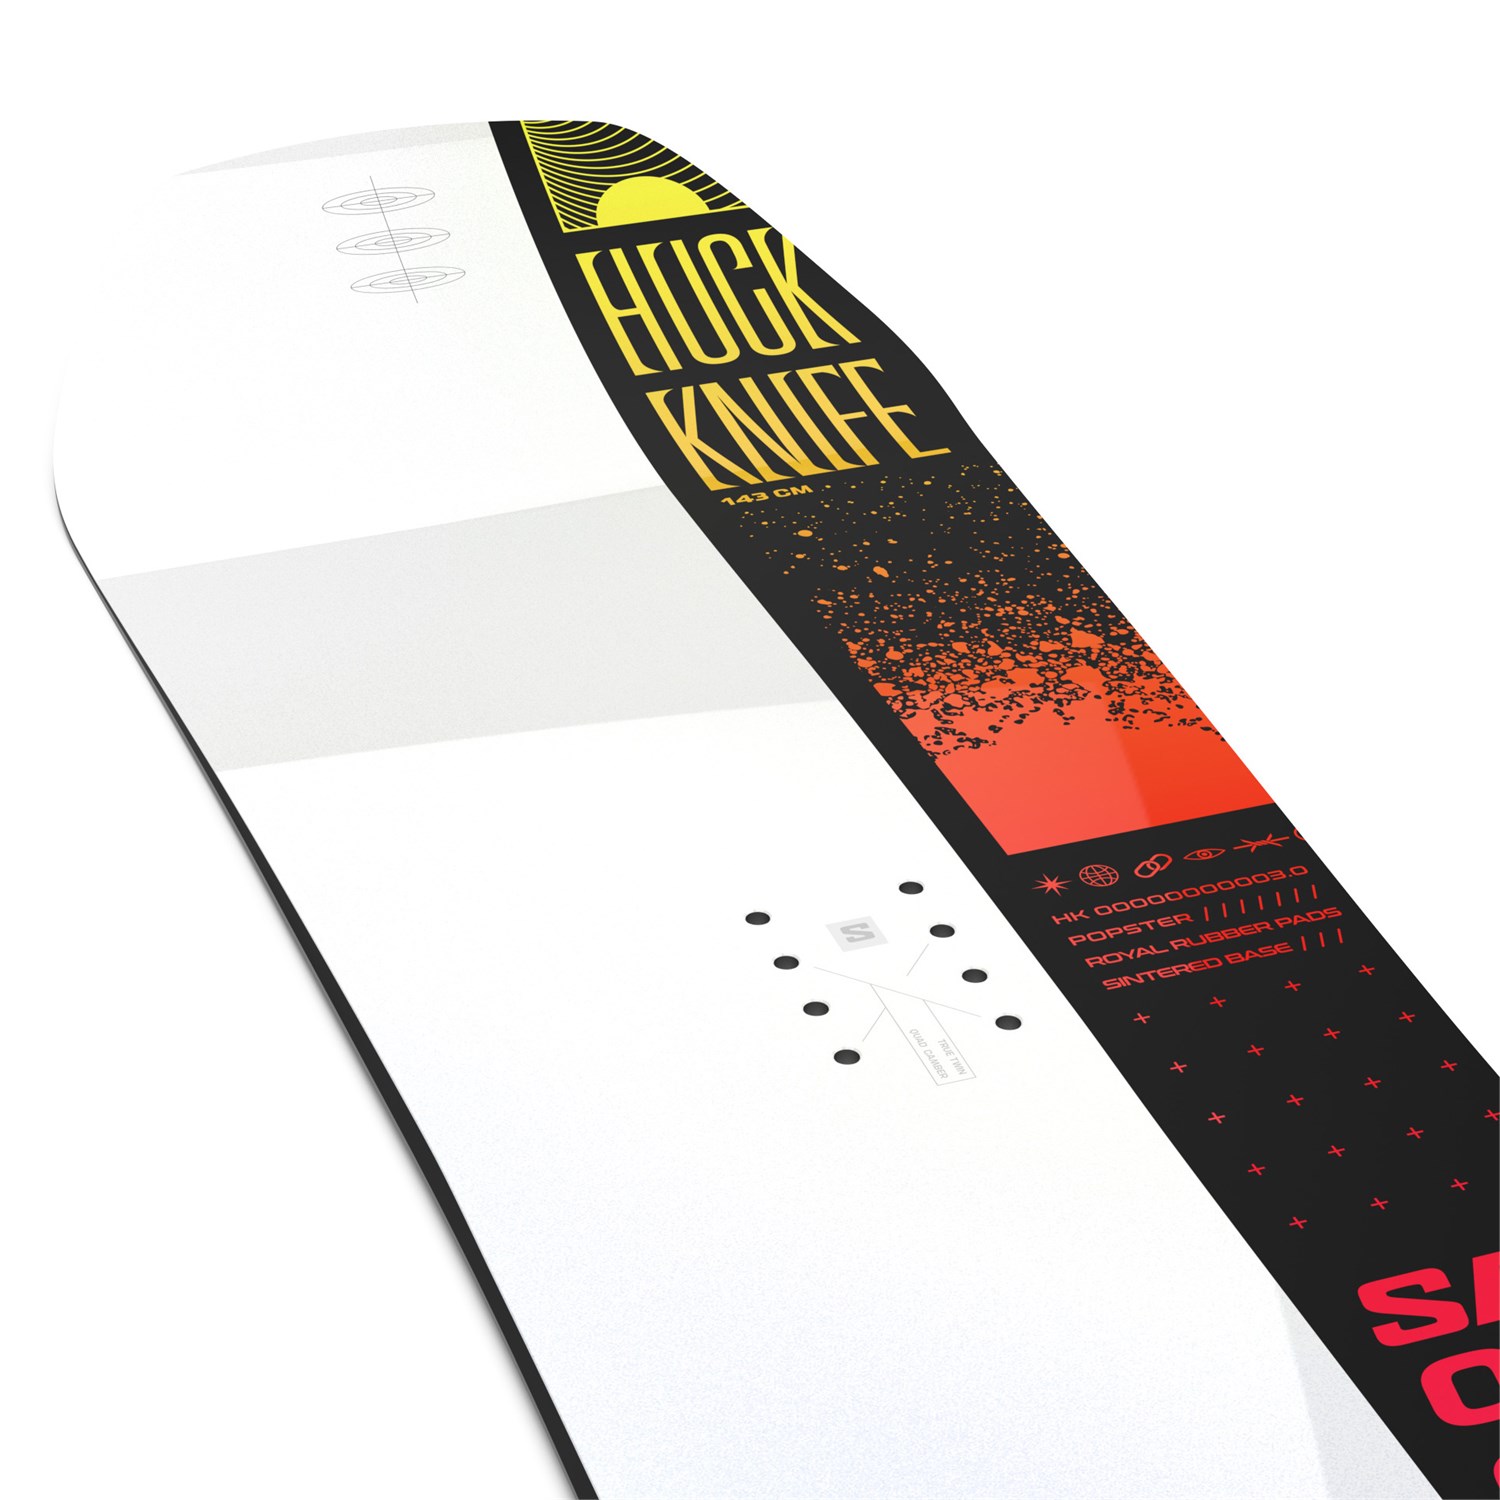 Salomon Huck Knife Grom Snowboard - Kids' 2024